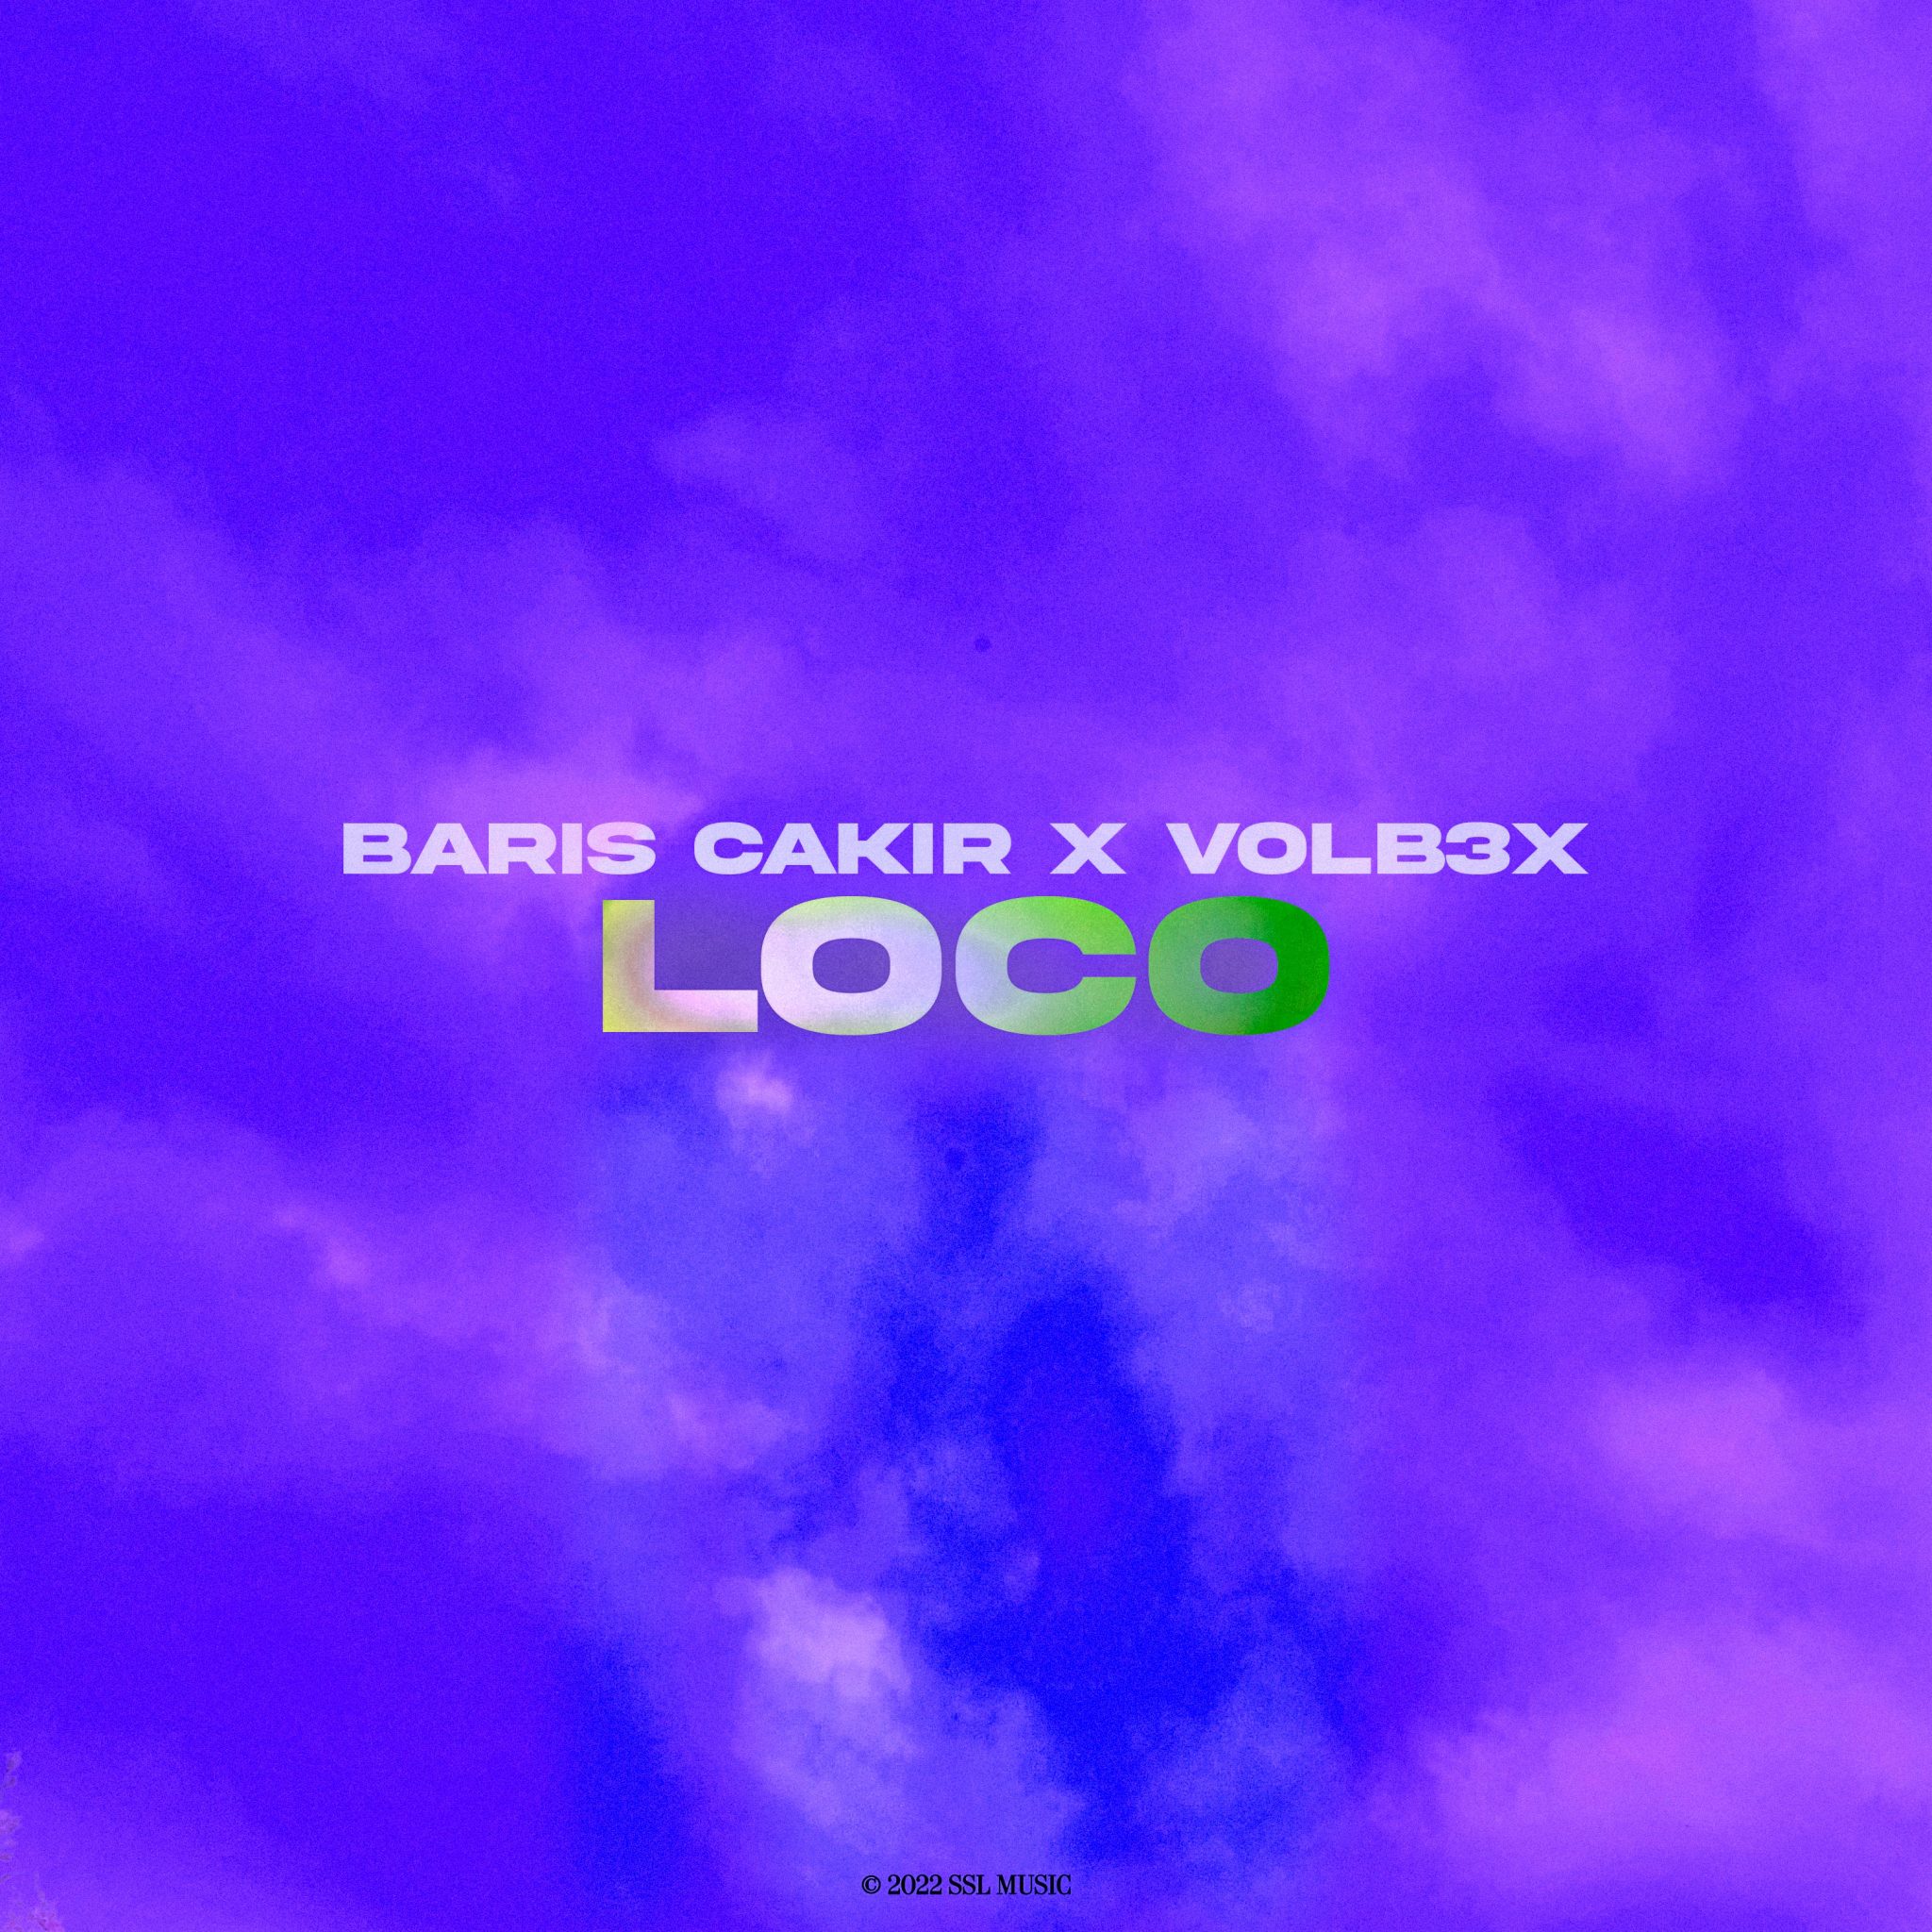 Volb3x. Brand Loco 10. Loco x Leberblume. Dark light volb3x